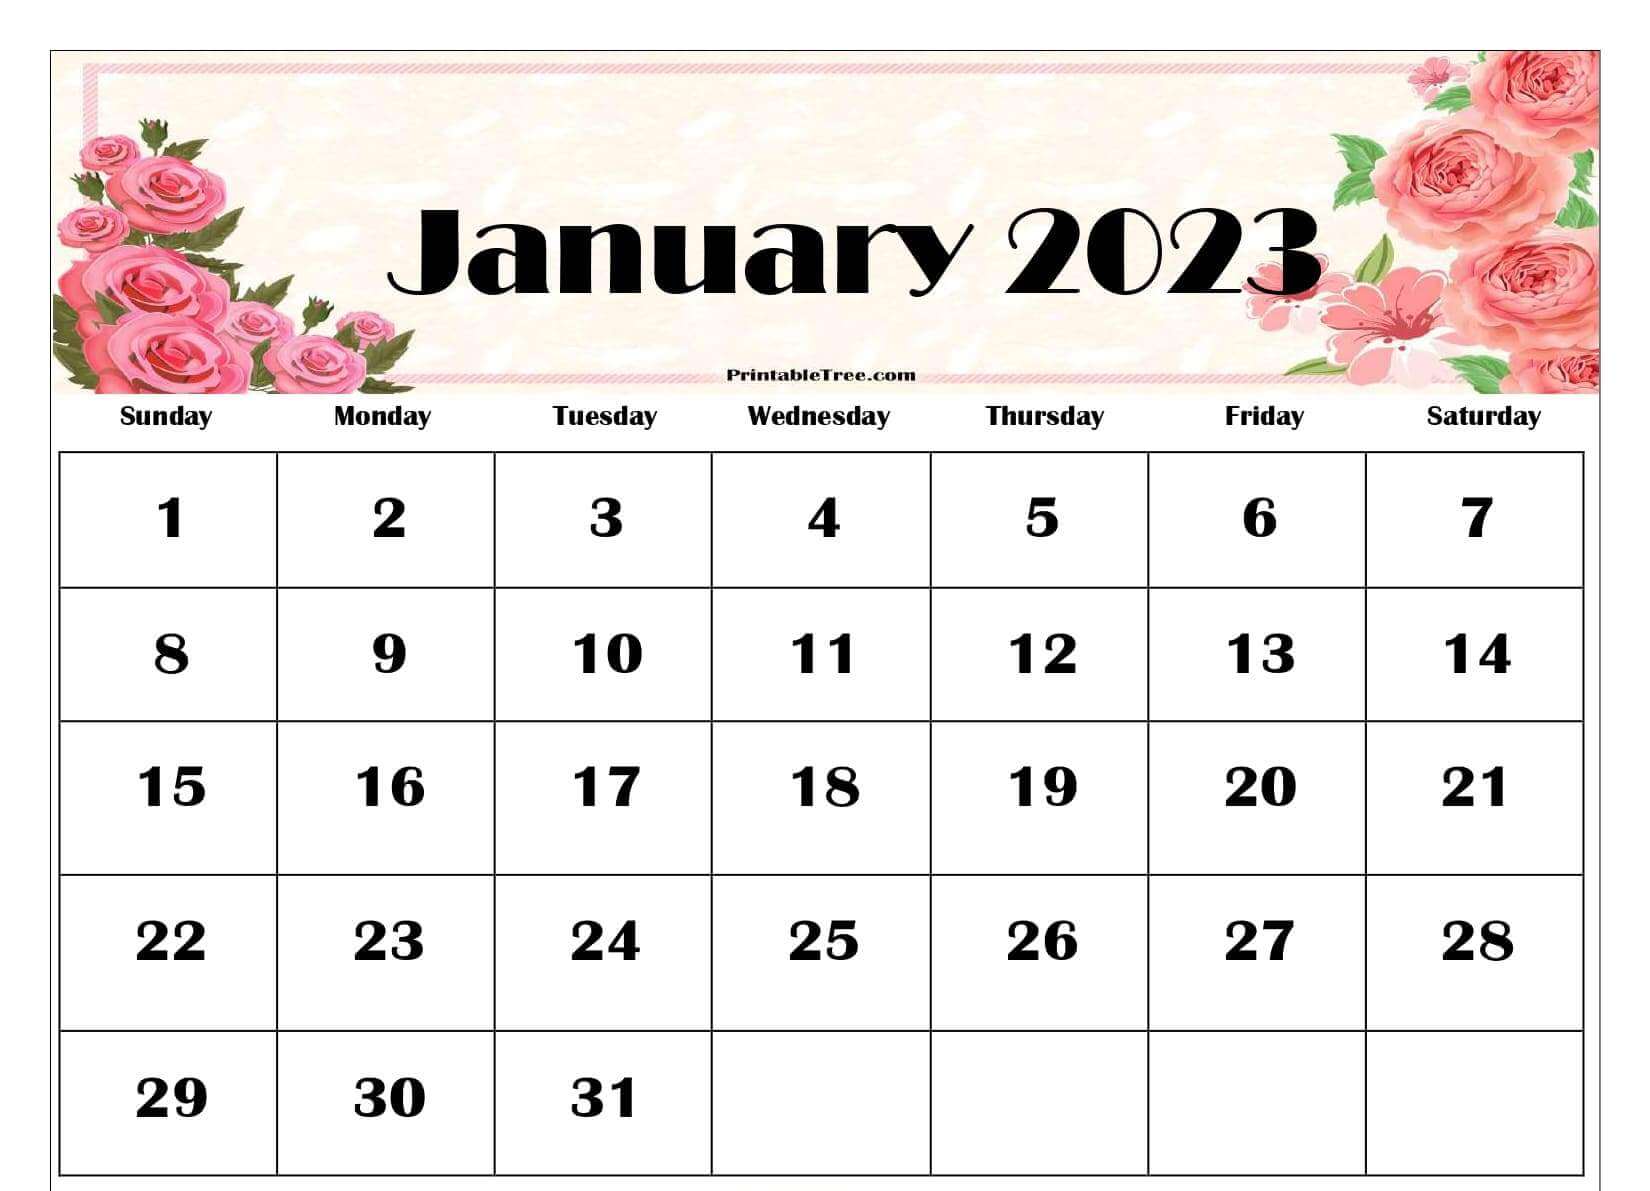 January 2023 Floral Calendar Printable